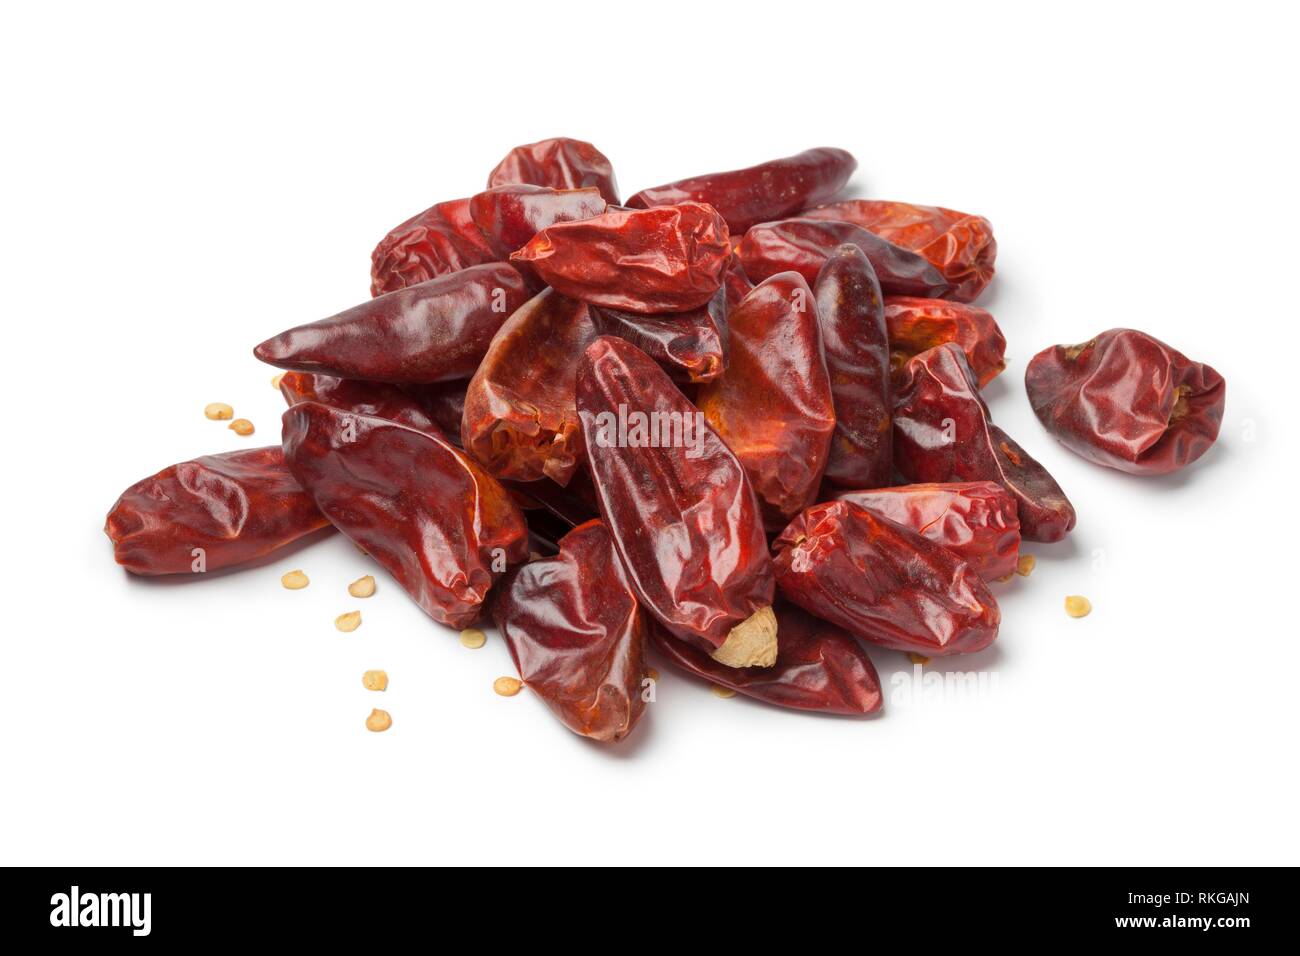 Montón de red hot chili peppers seca sobre fondo blanco. Foto de stock